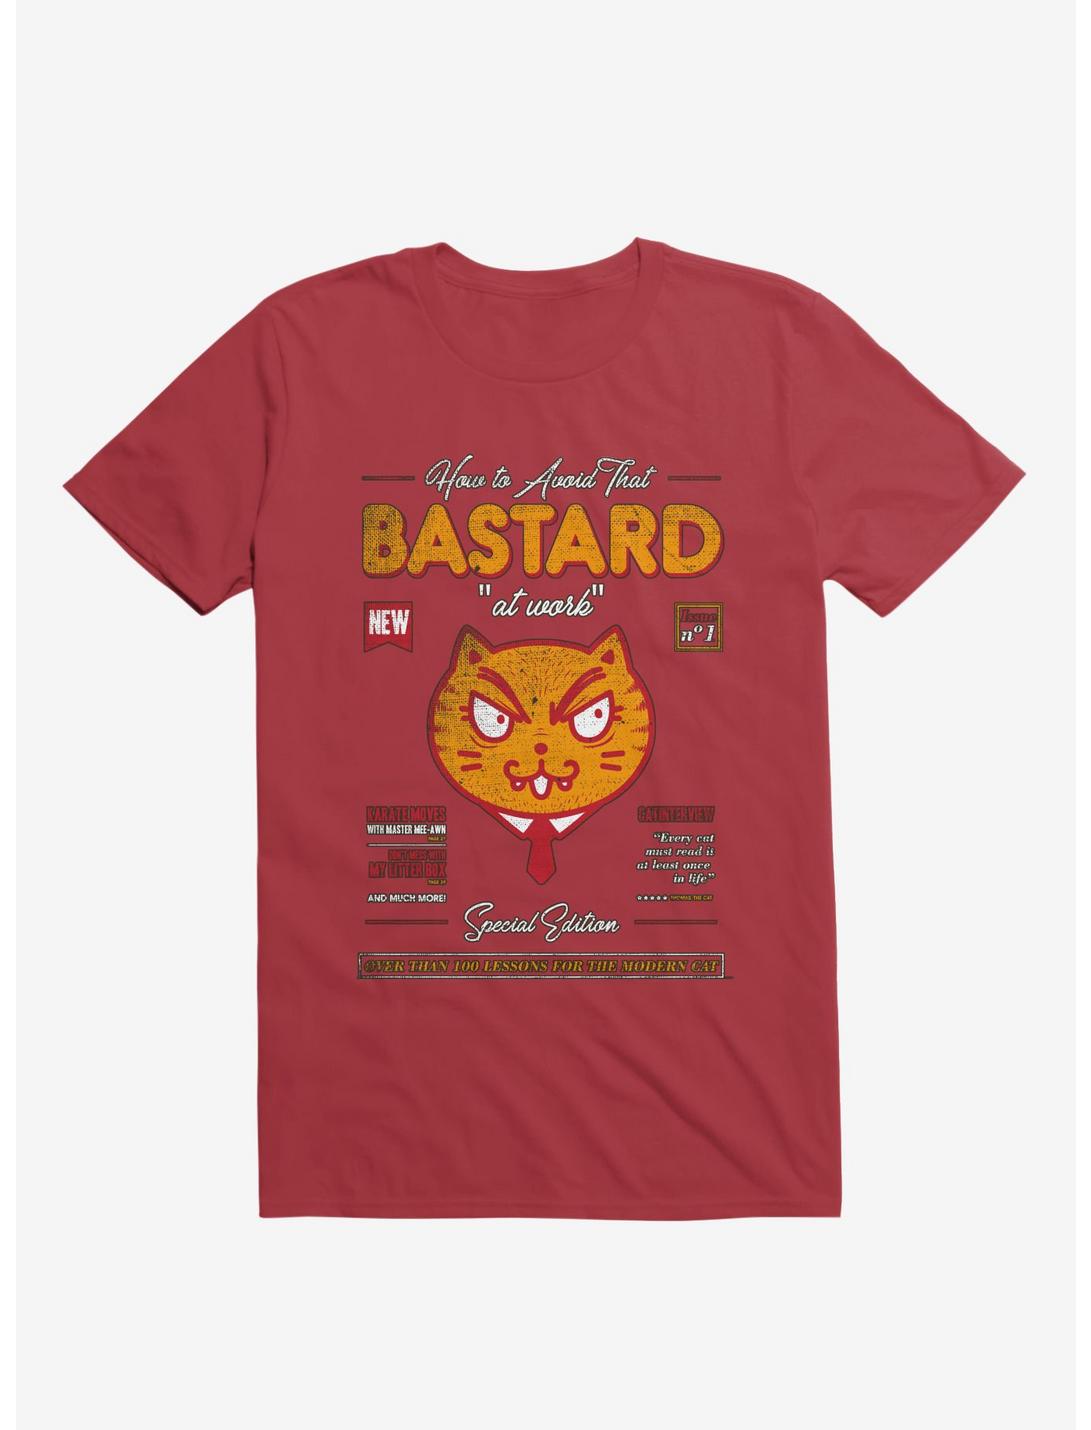 Avoid That Bastard At Work Cat Magazine Red T-Shirt, RED, hi-res